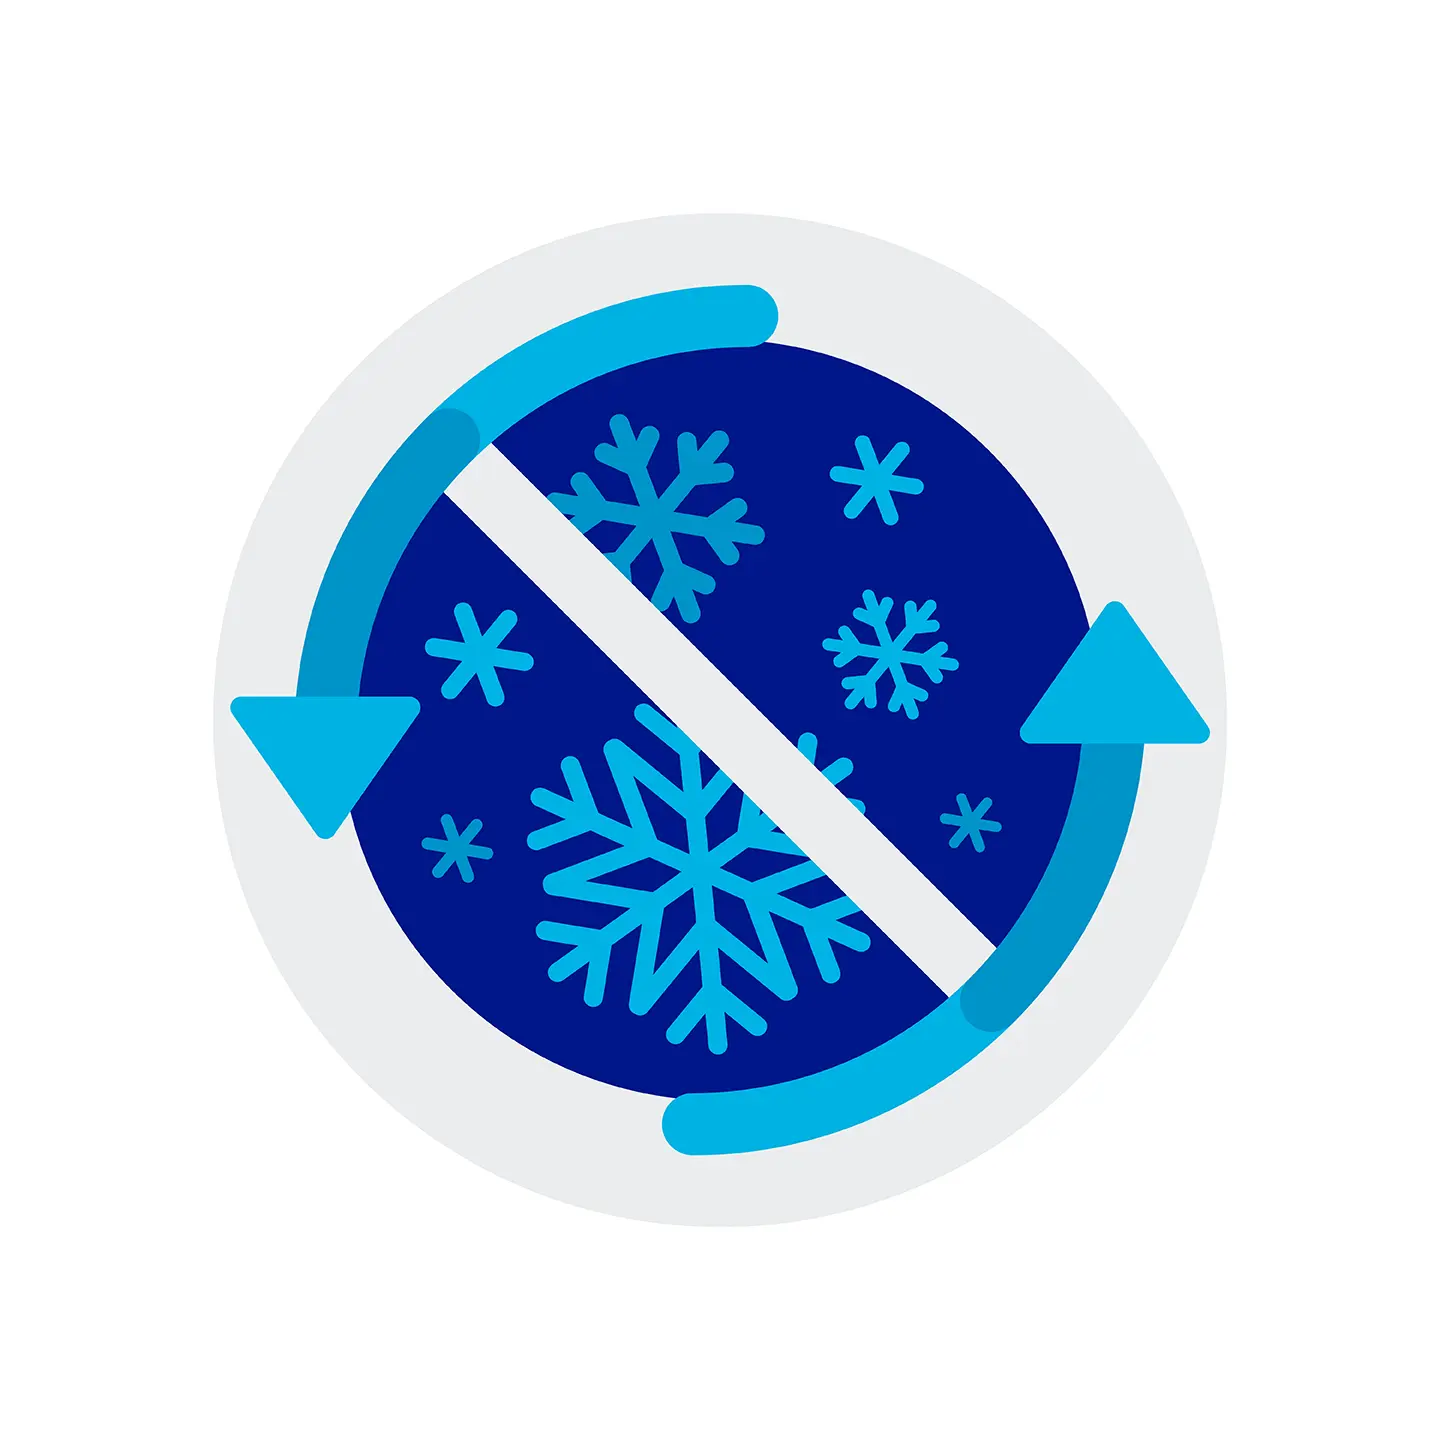 No frost icon